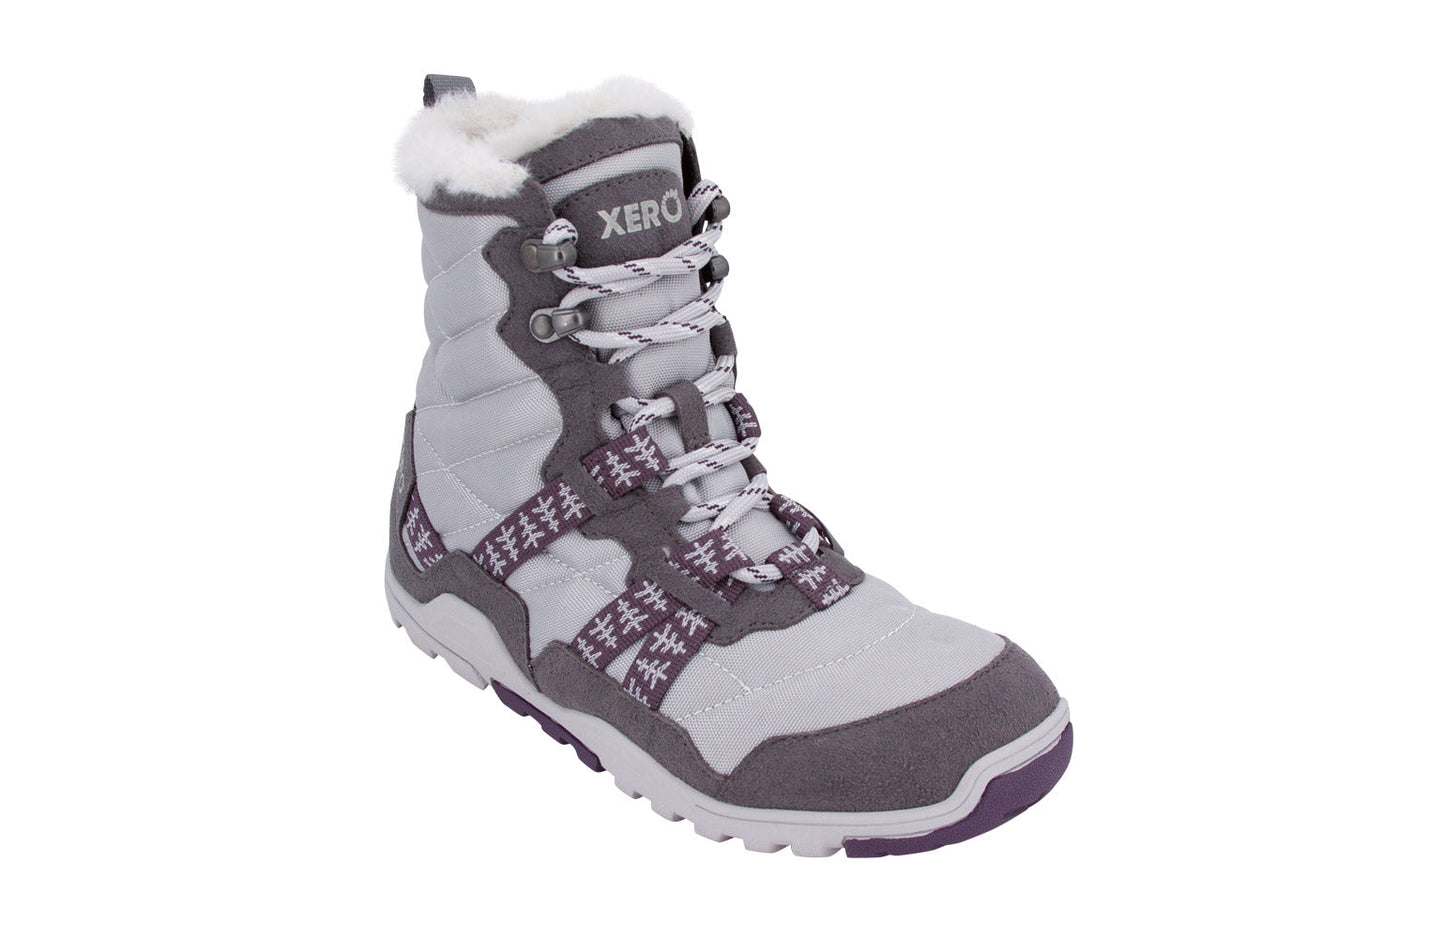 Xero Shoes Alpine Womens barfods vinterstøvler til kvinder i farven frost, vinklet